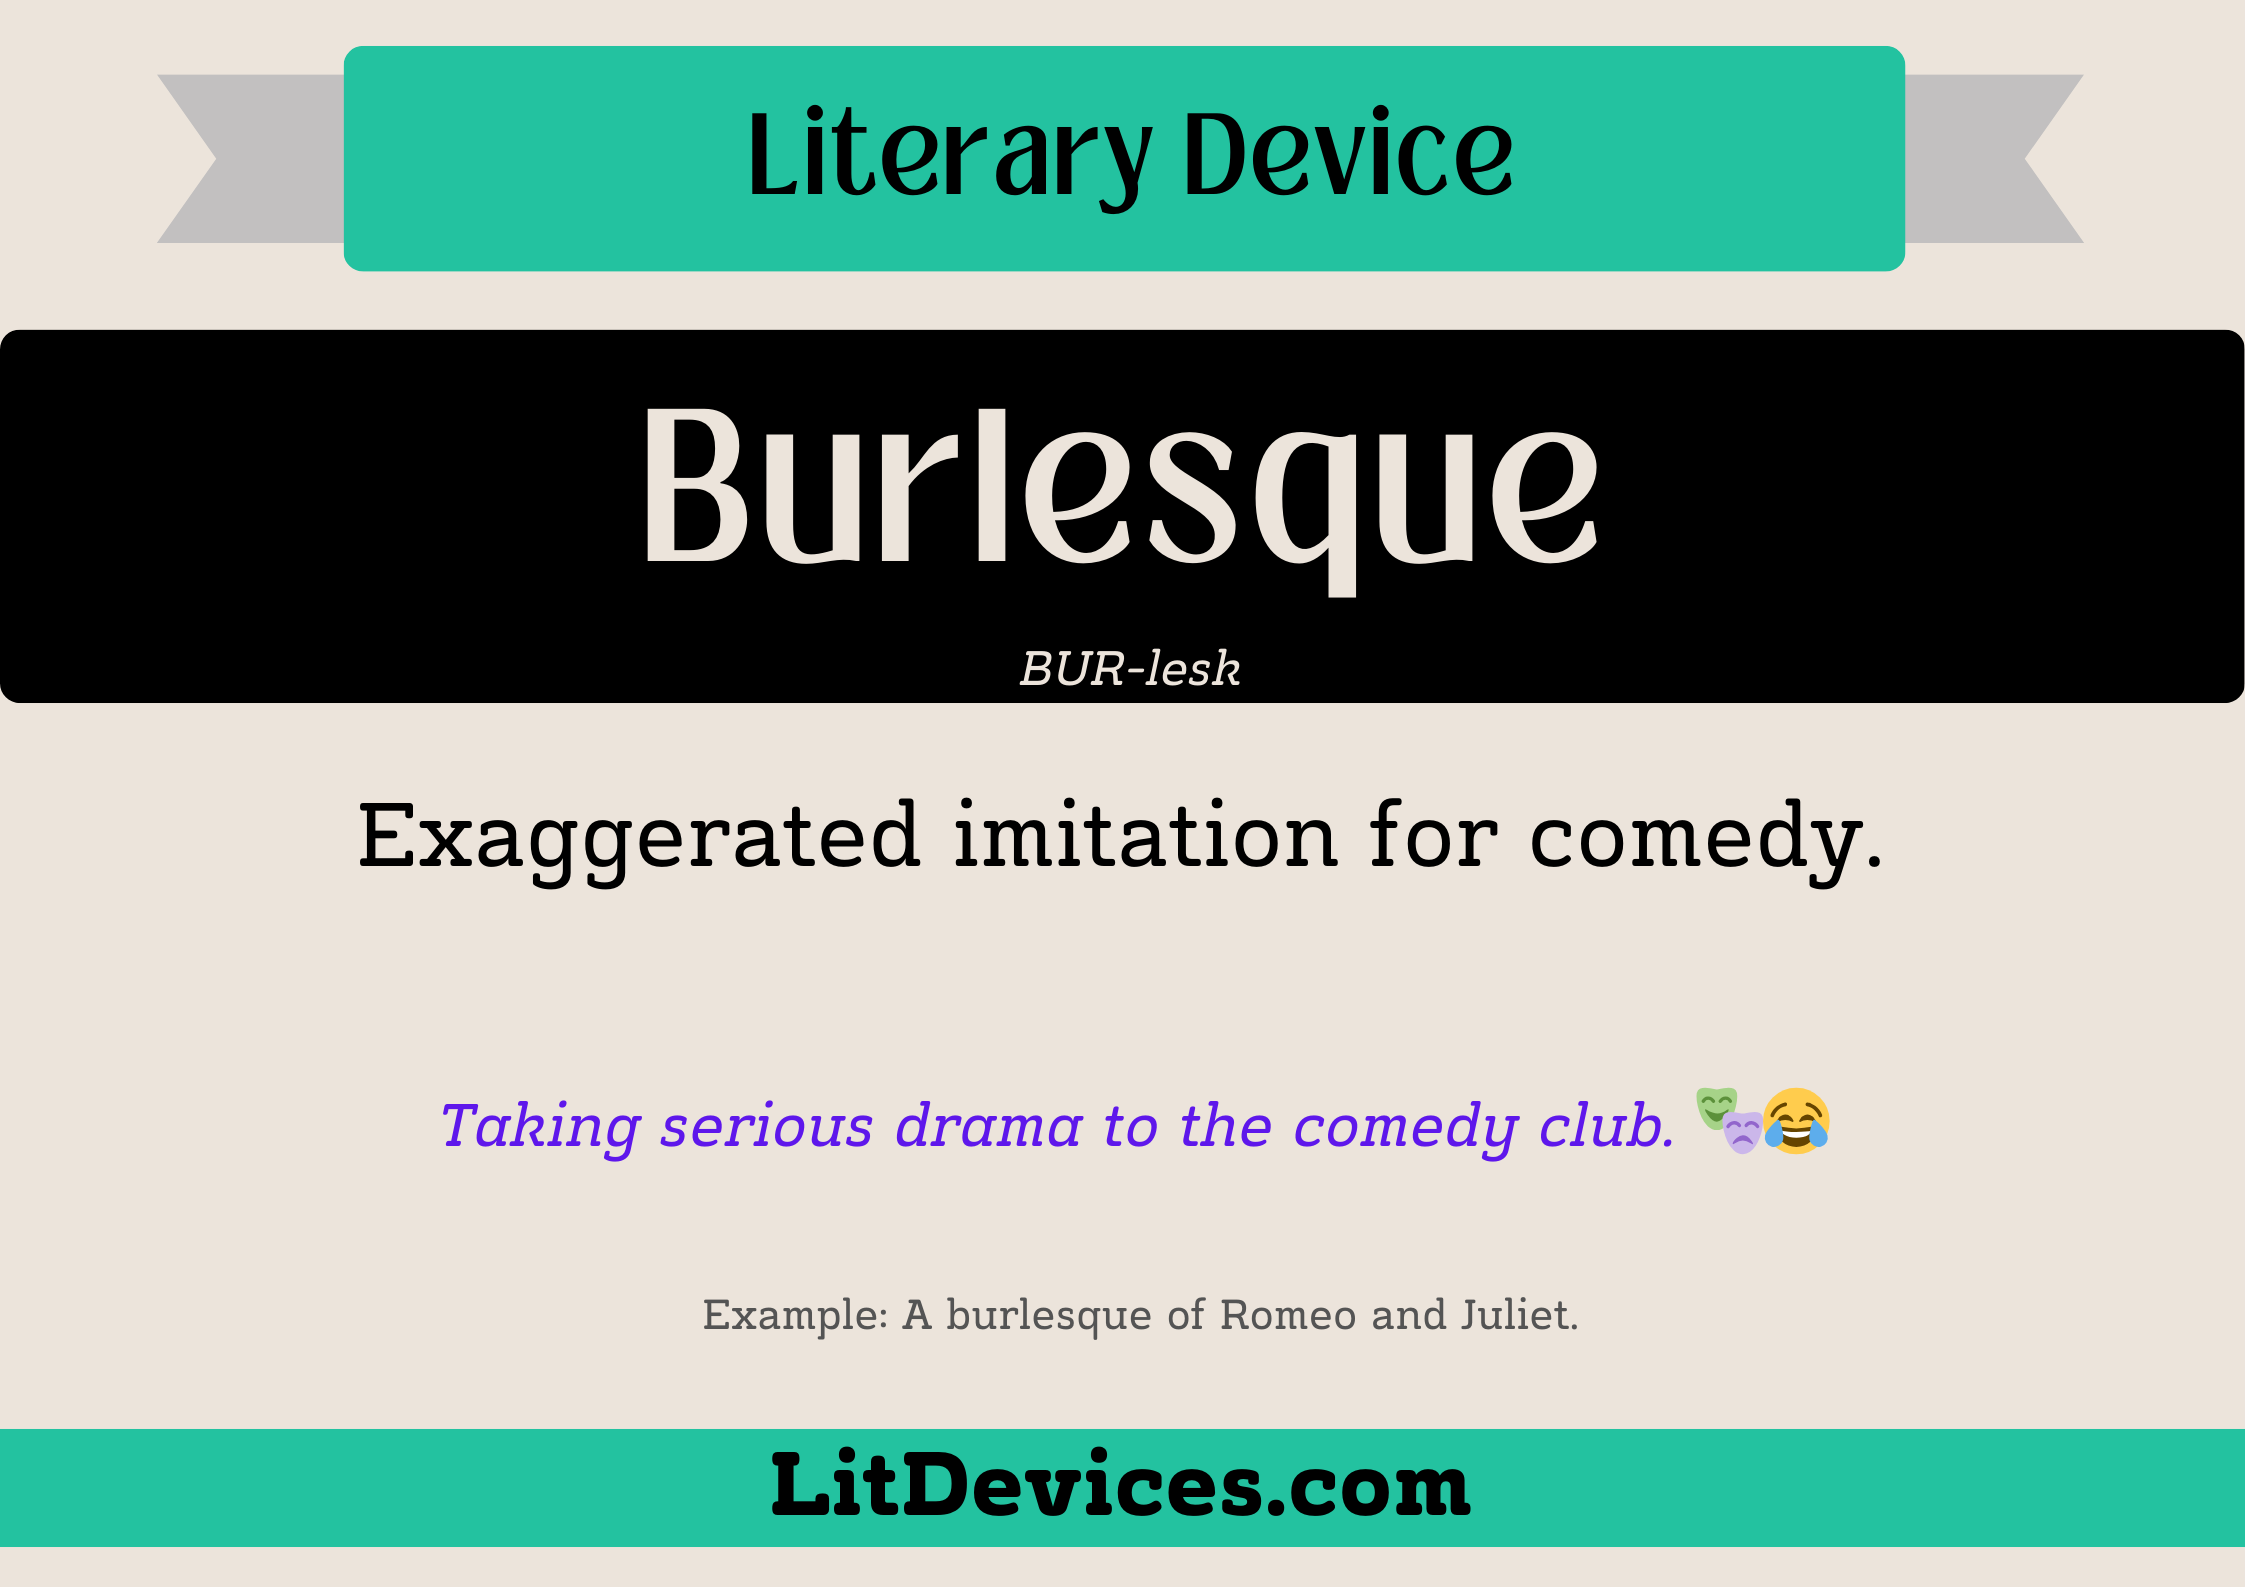 burlesque literary device